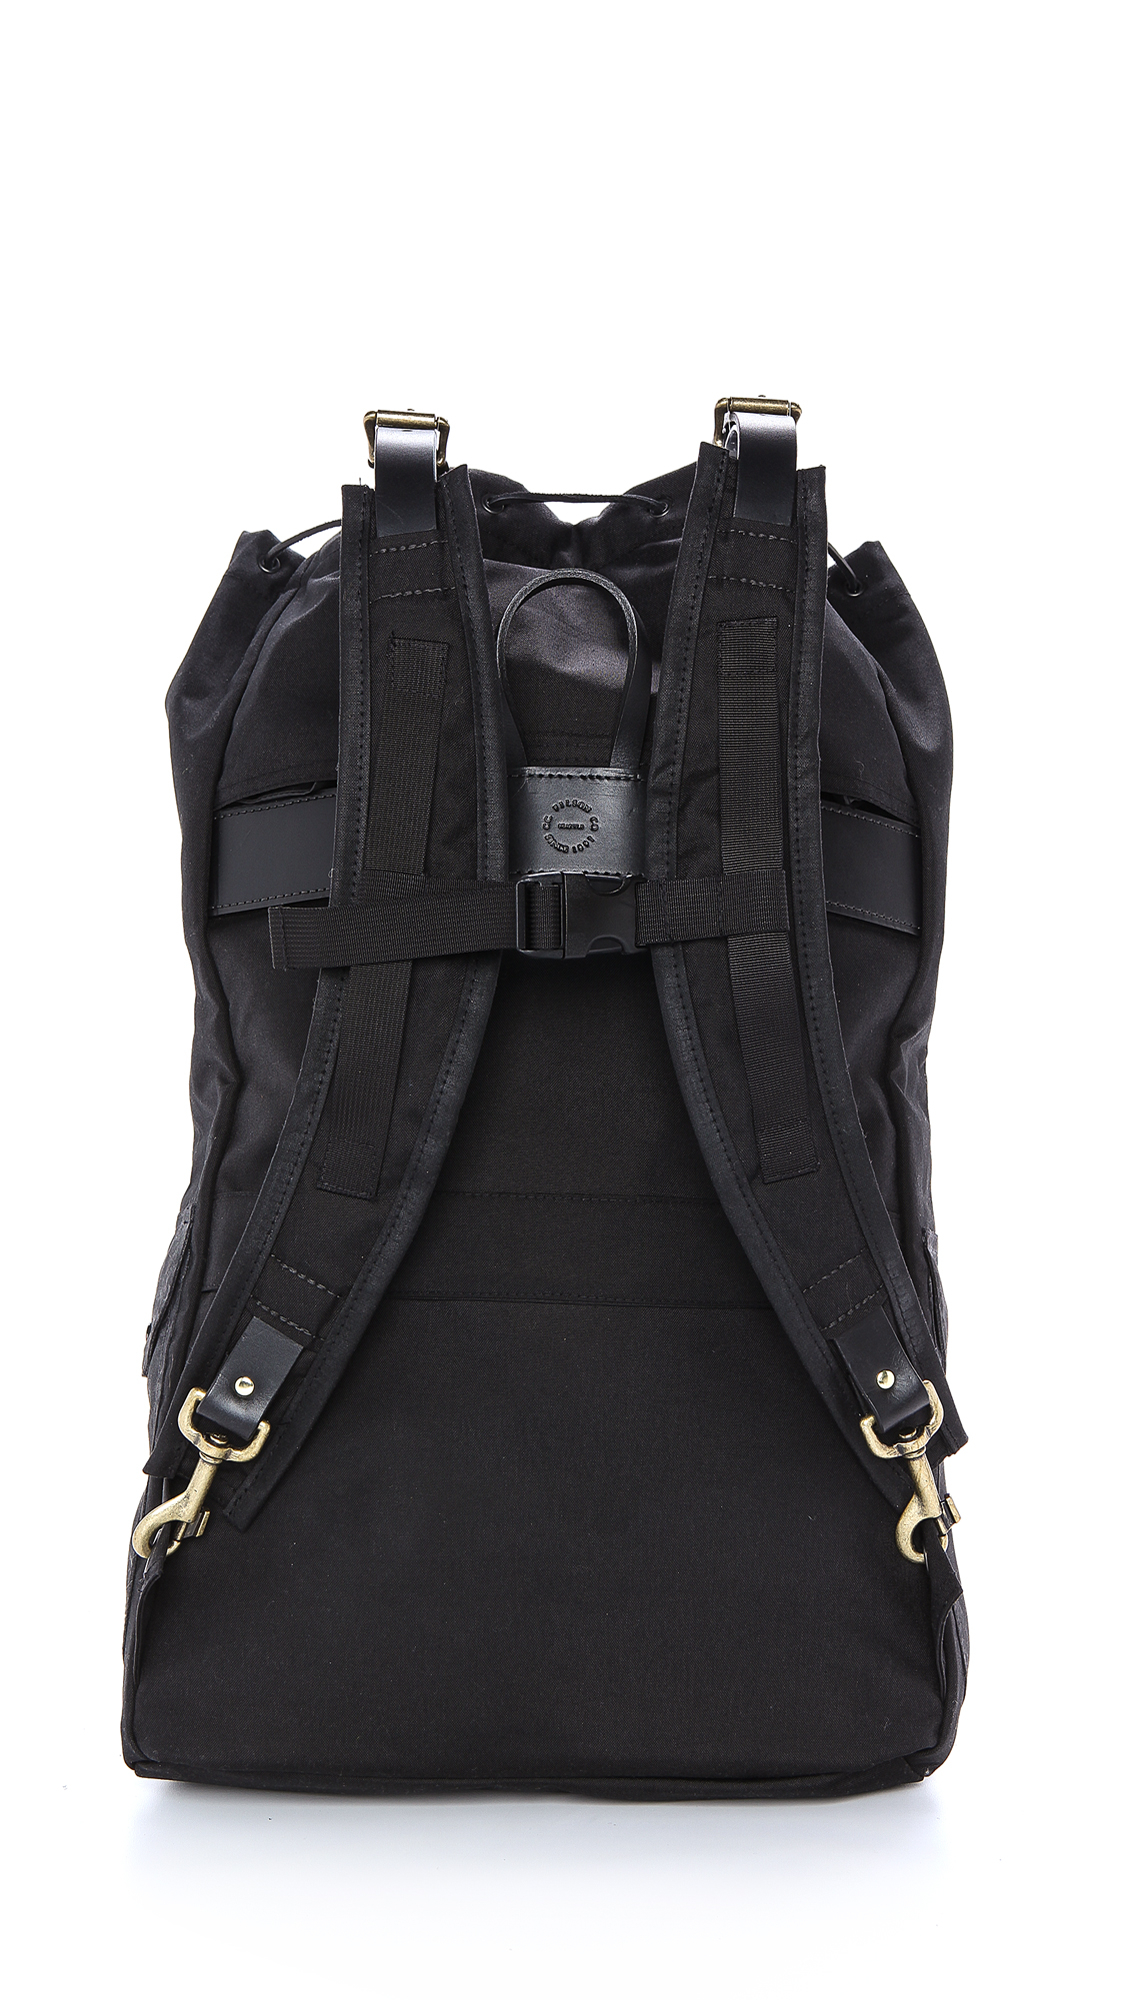 Lyst - Filson Duffel Backpack in Black for Men